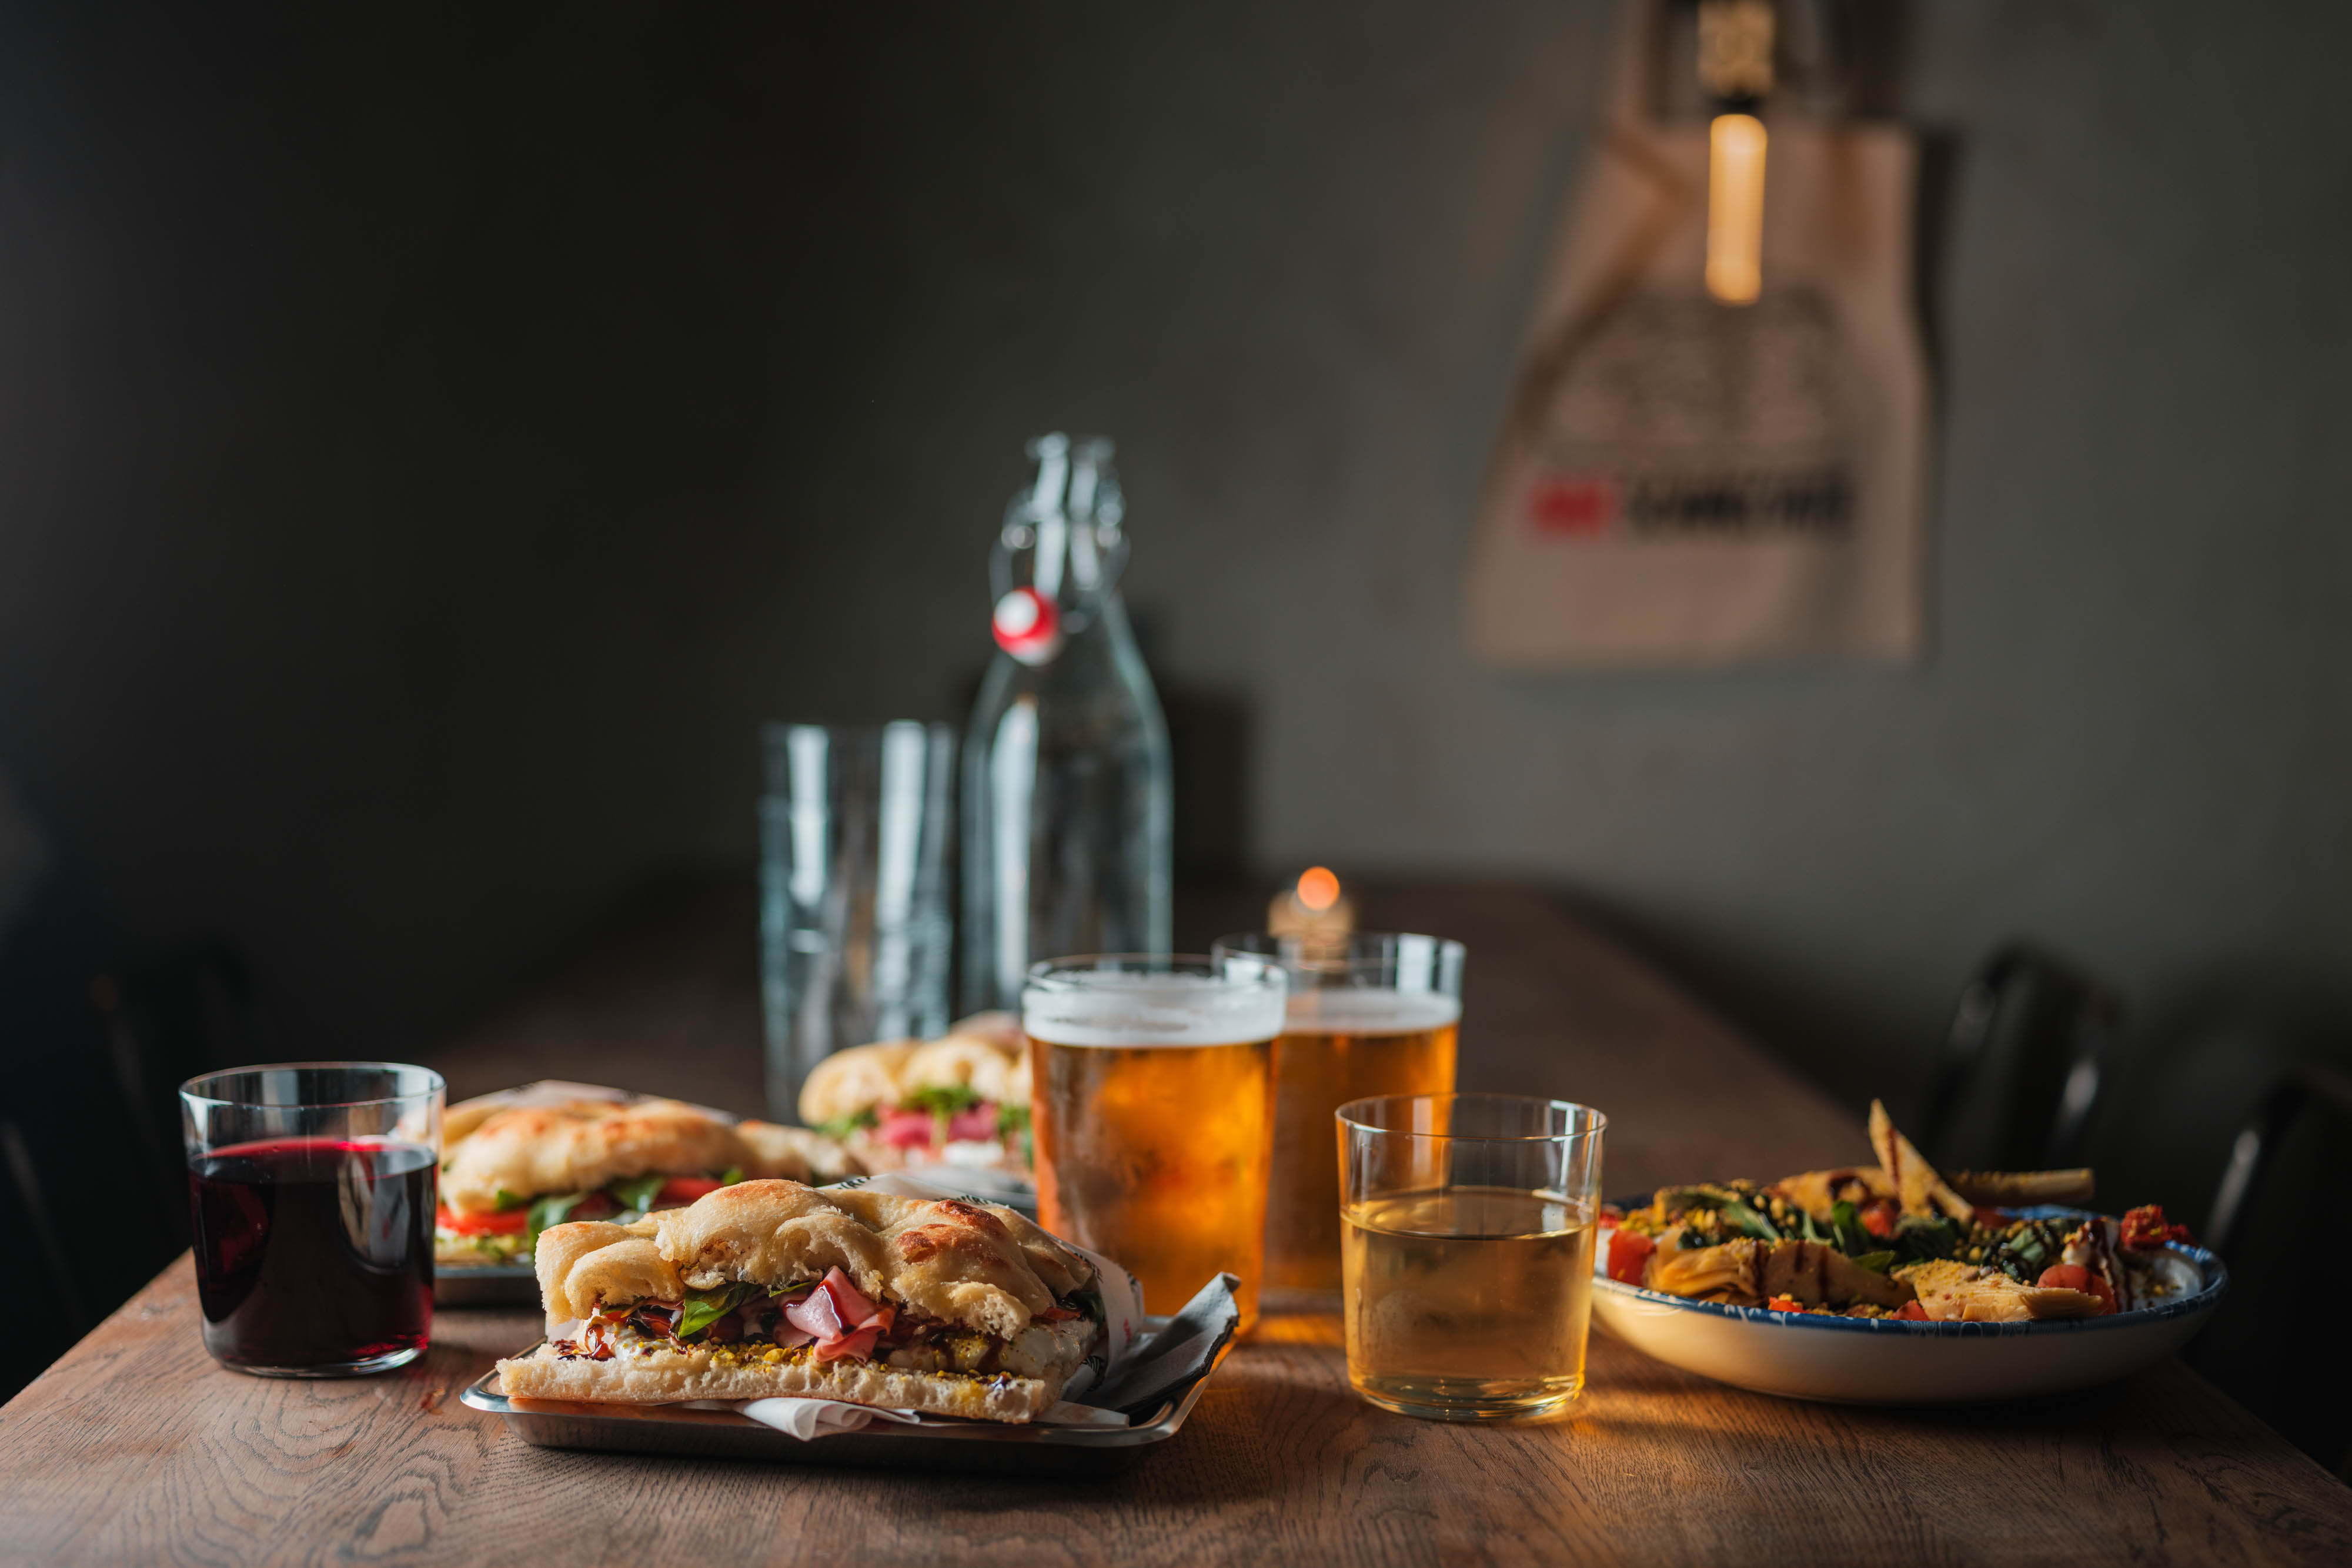 Bar Schiacciate Drottninggatan – Comfort food